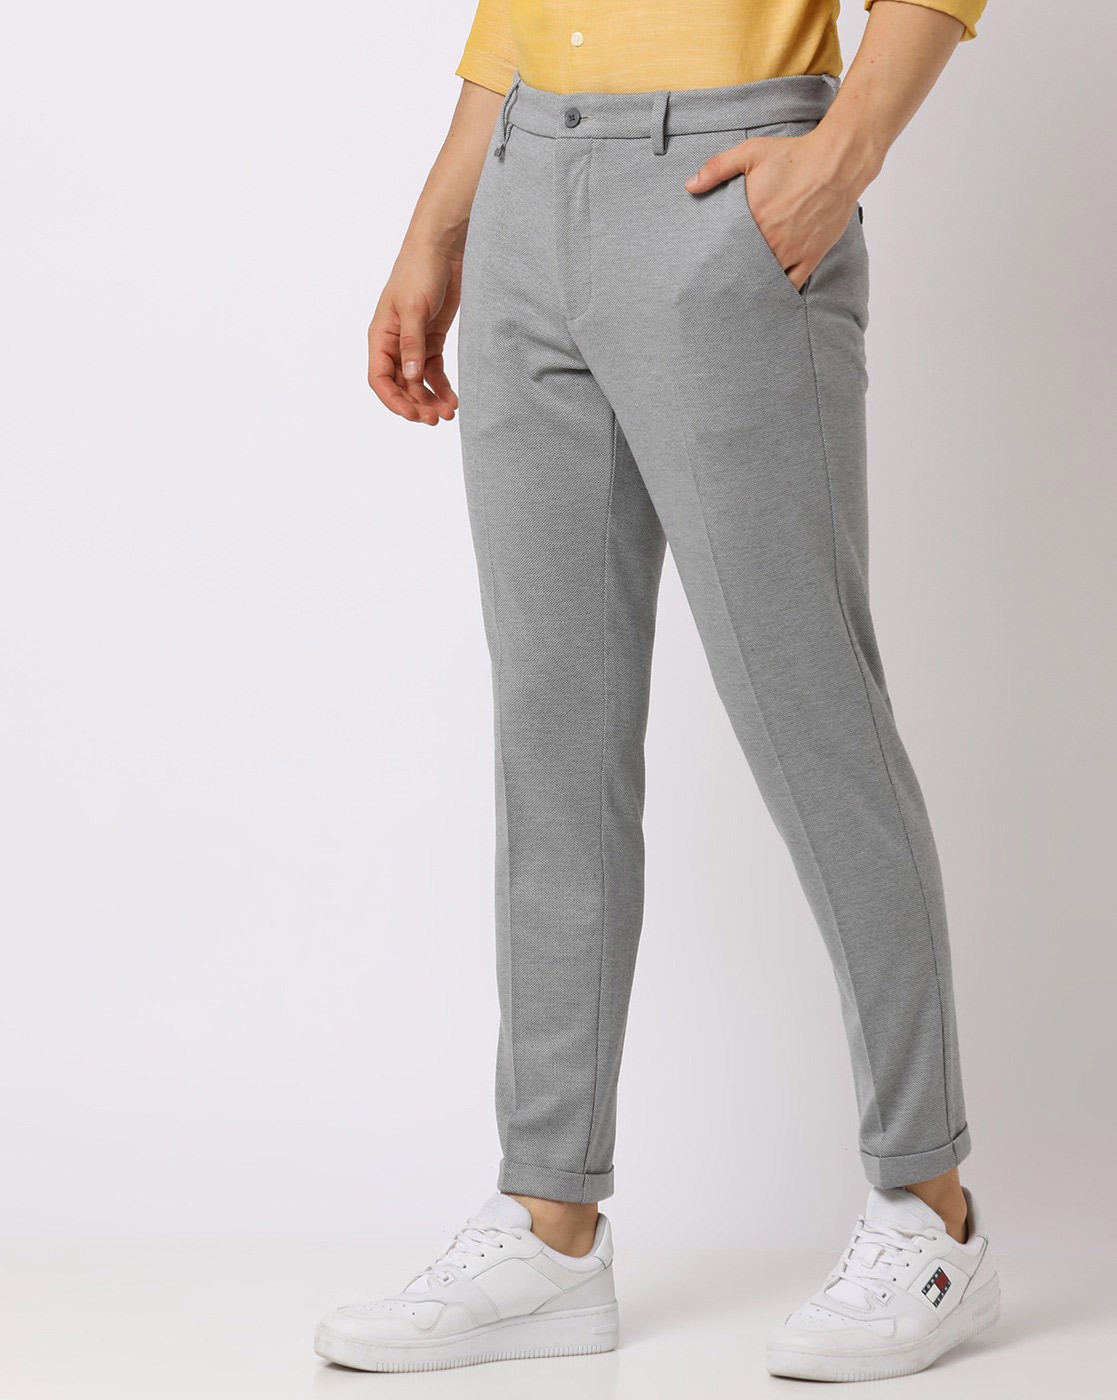 Mens Slim Fit Light Gray Flat Front Wool Dress Pants | The Suit Depot